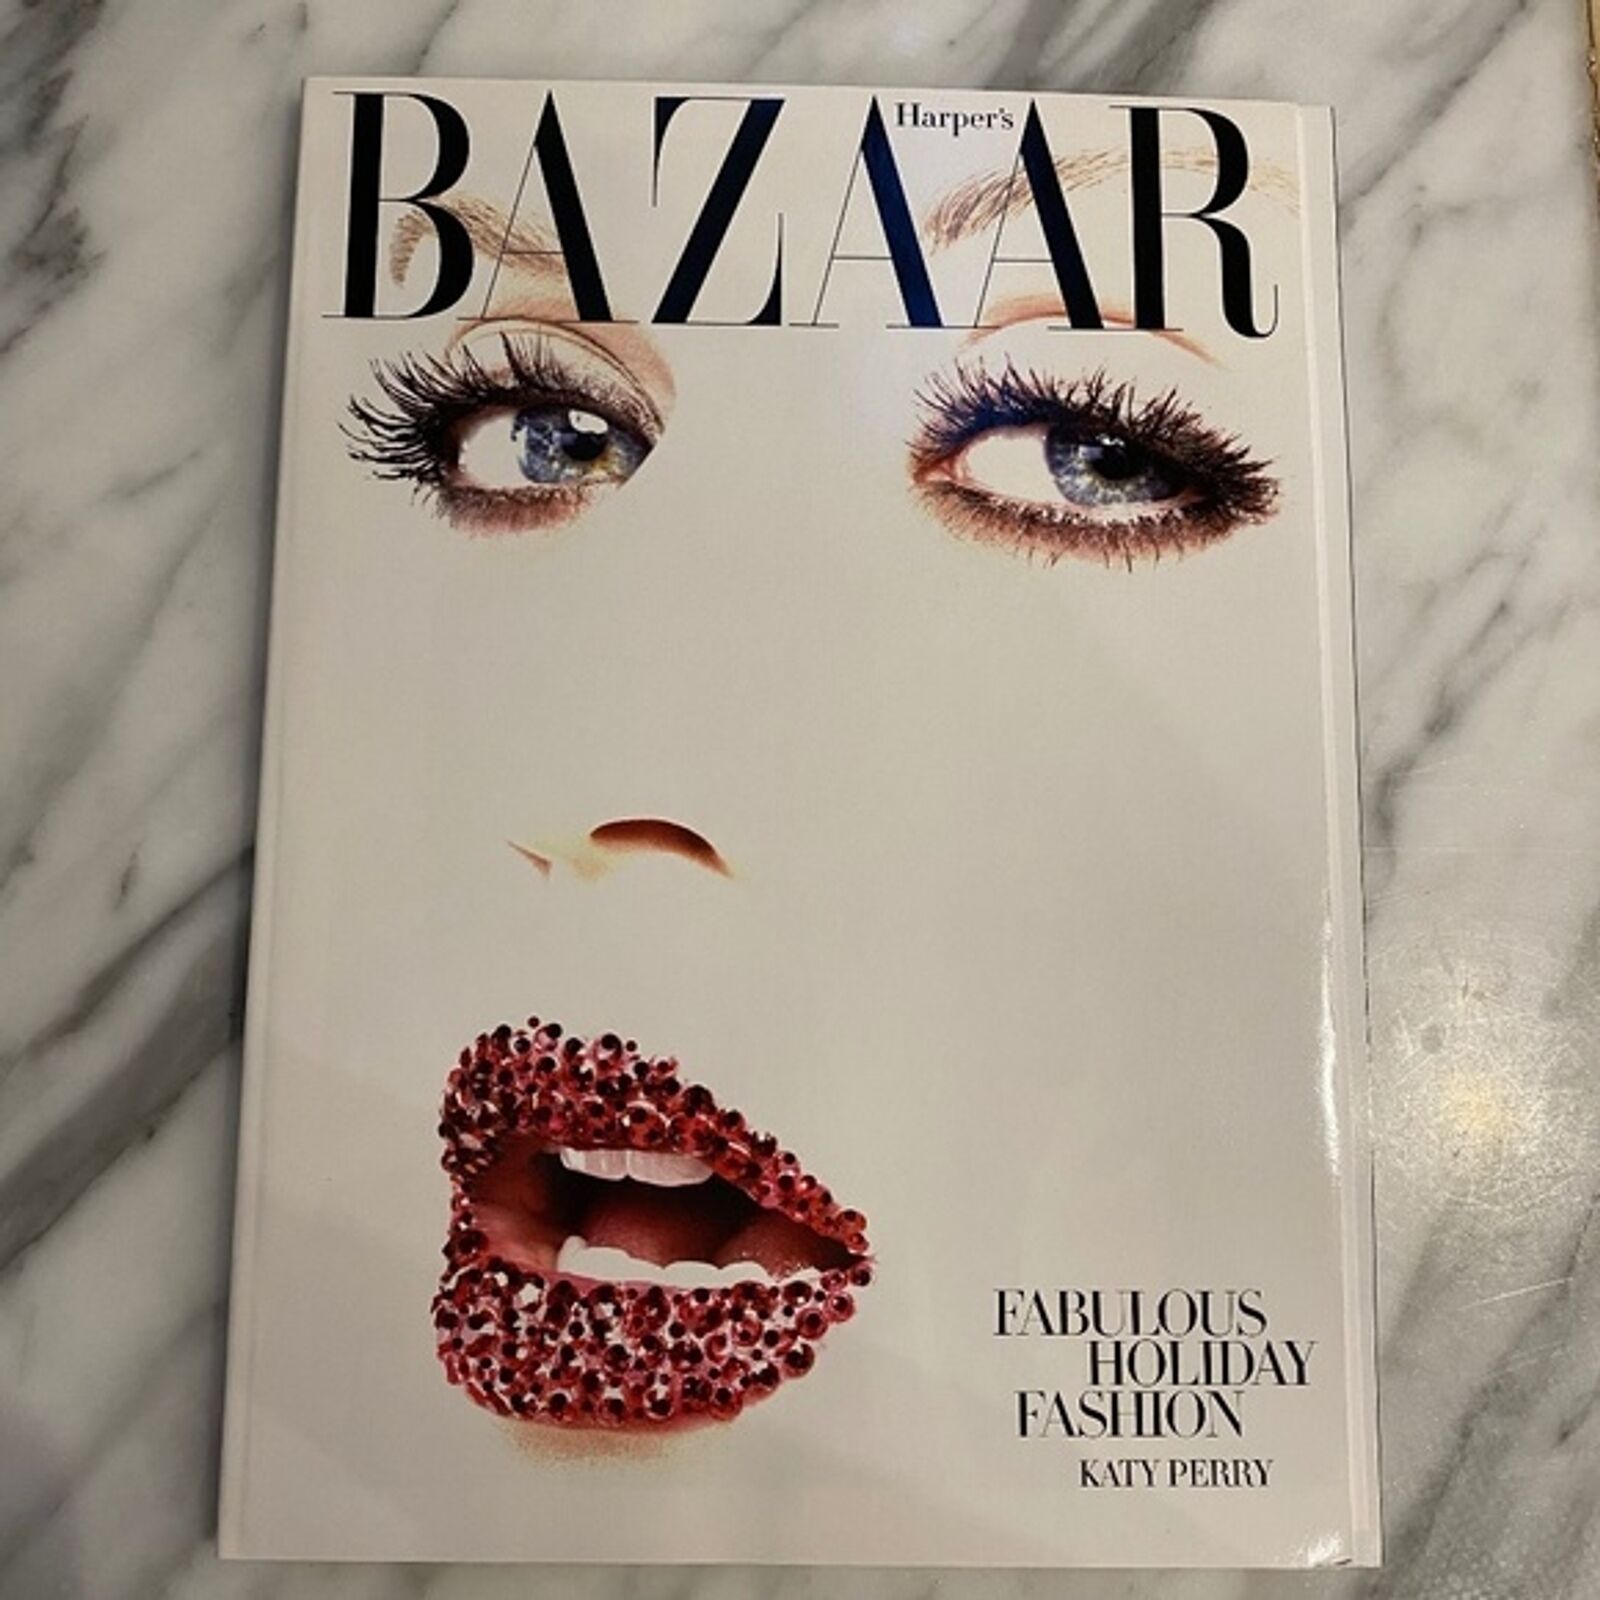 Bazaar Magazine Katy Perry Swarovski Crystals Ltd. Edition December